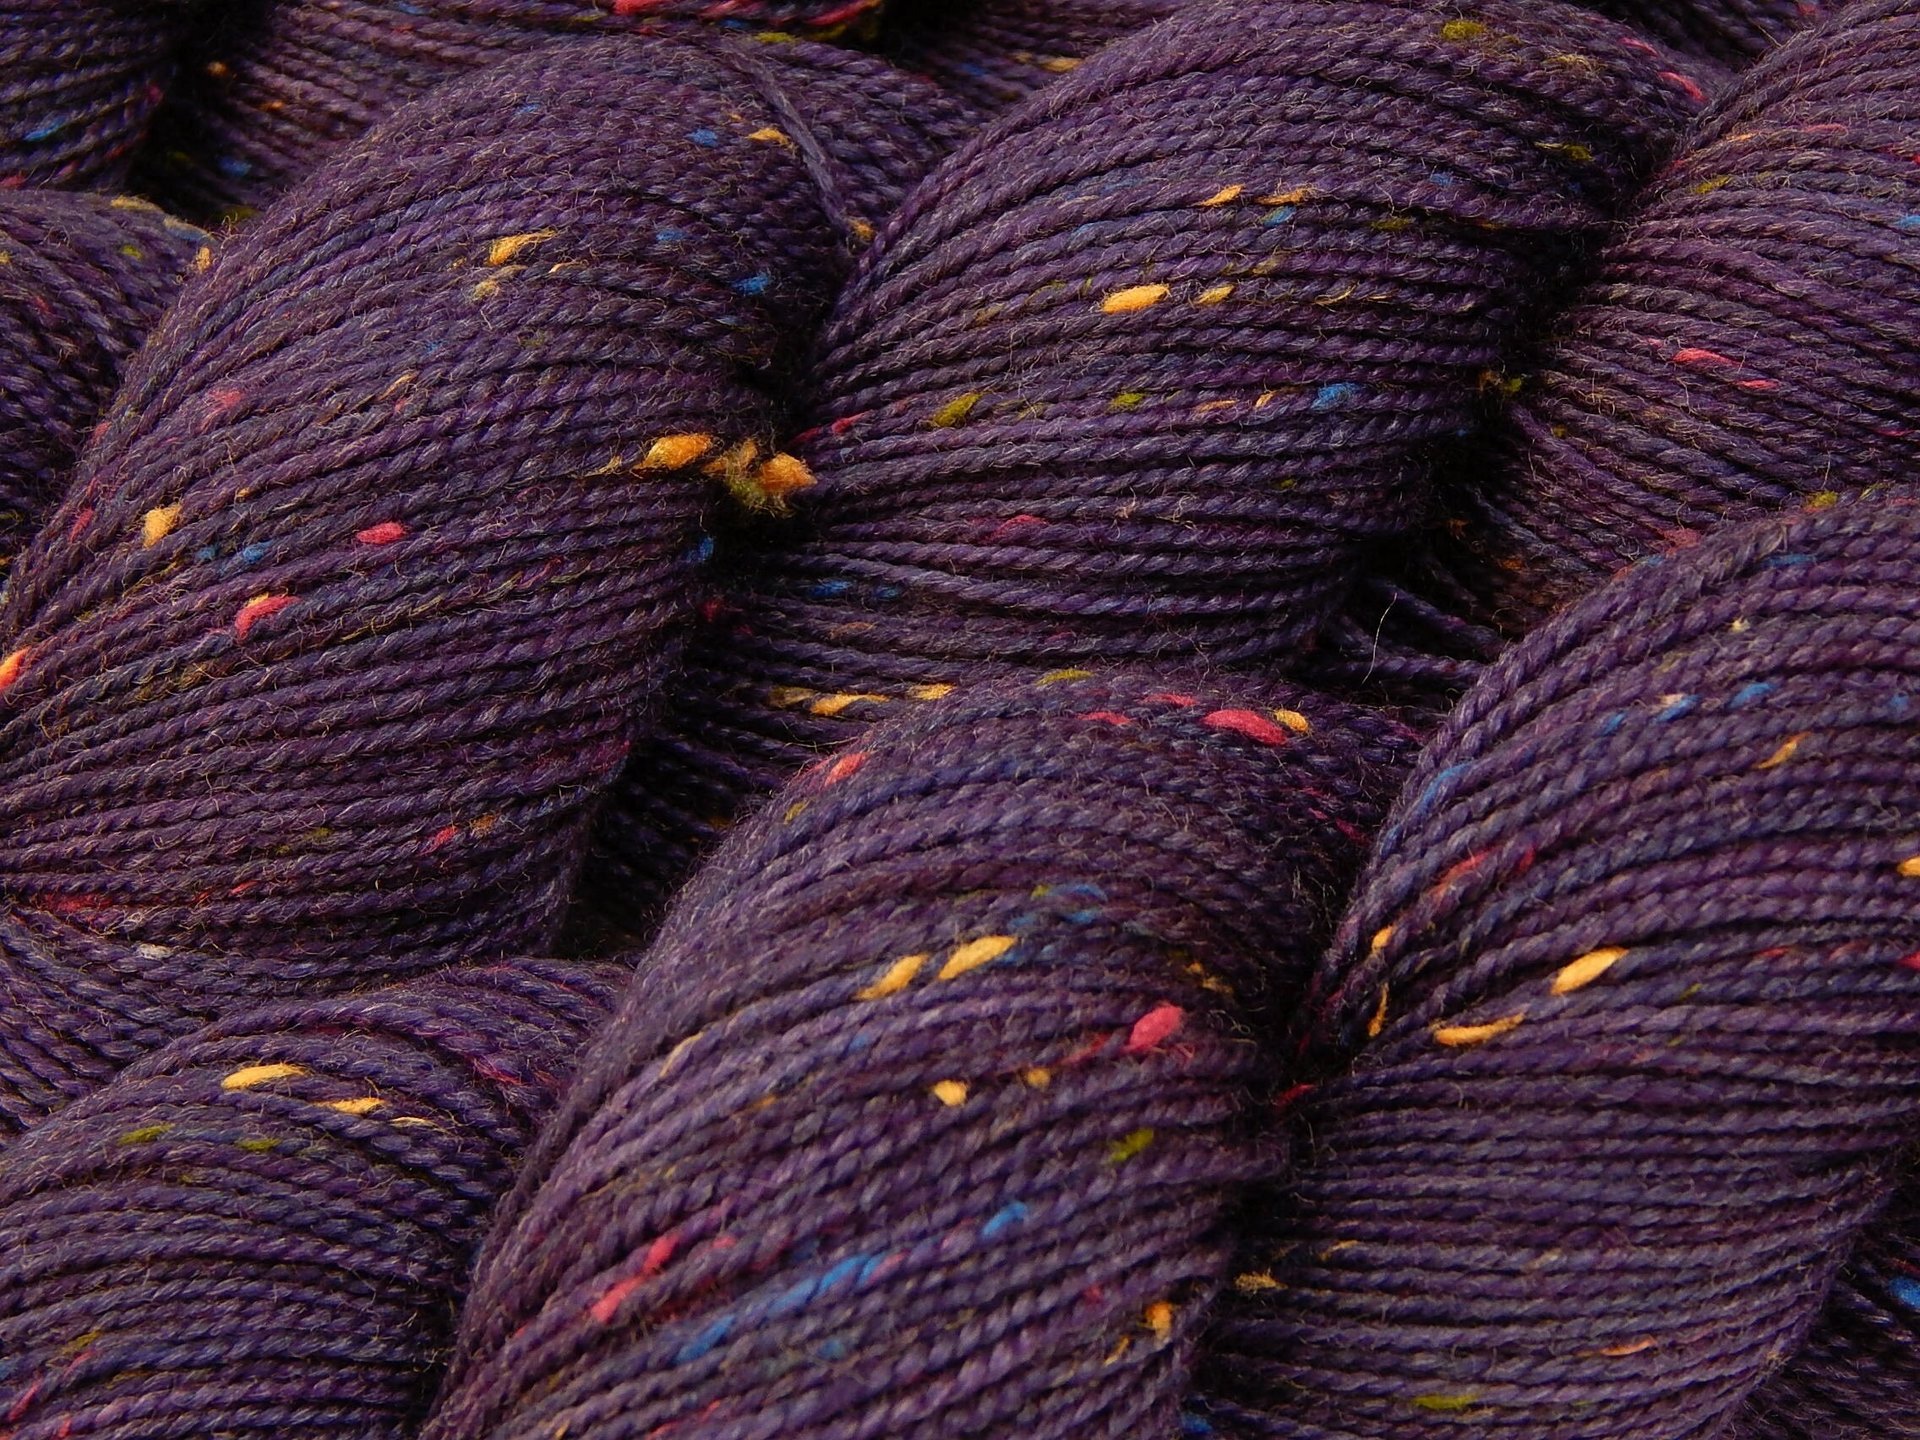 Hand Dyed Yarn, Tweed Fingering Weight Superwash Merino Wool Nylon - Blackberry Tonal - Indie Dyer Knitting Yarn, Purple Flecks Sock Yarn